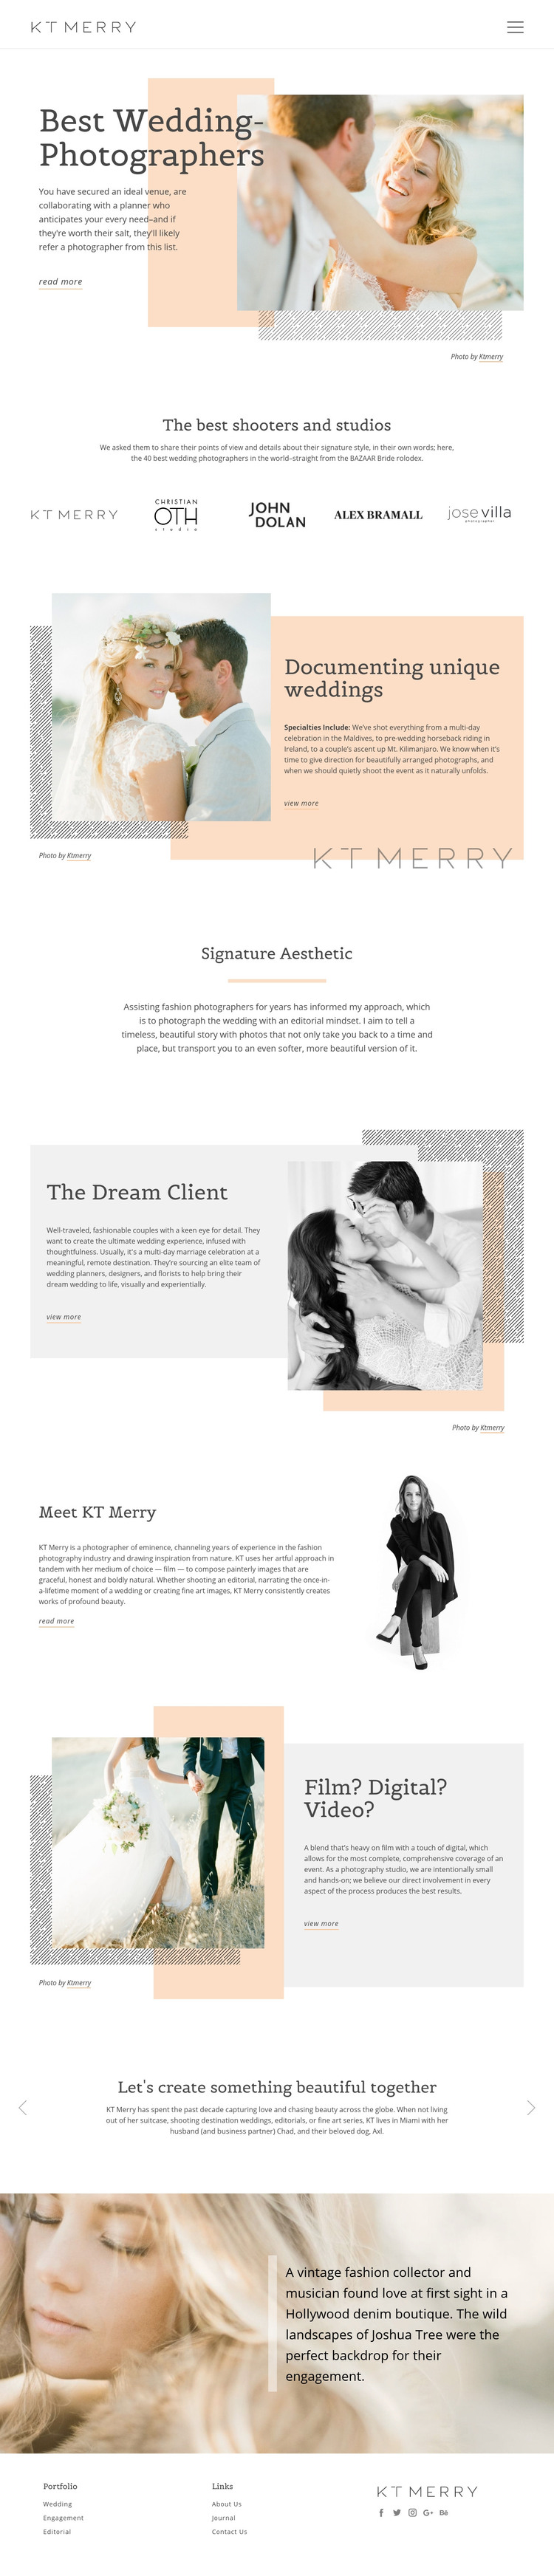 Wedding Photographers Homepage Design